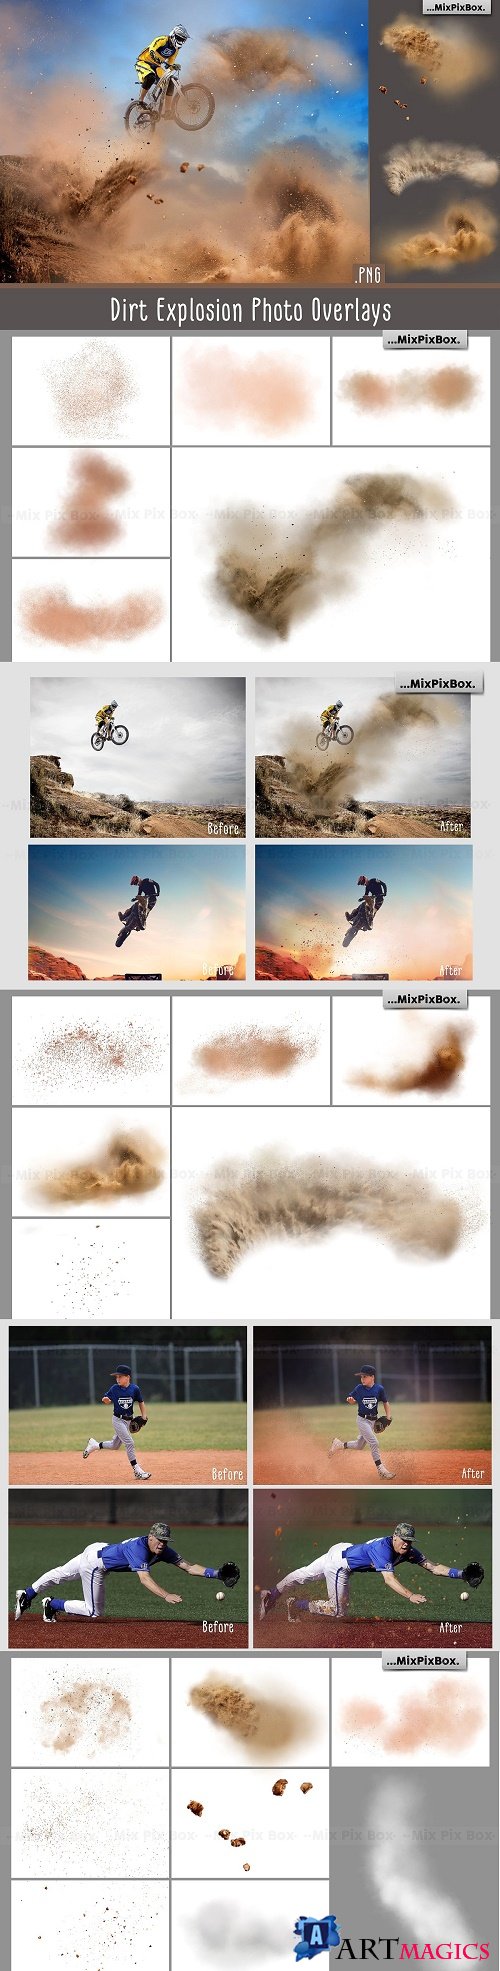 Dirt Explosion Photo Overlays - 4533771